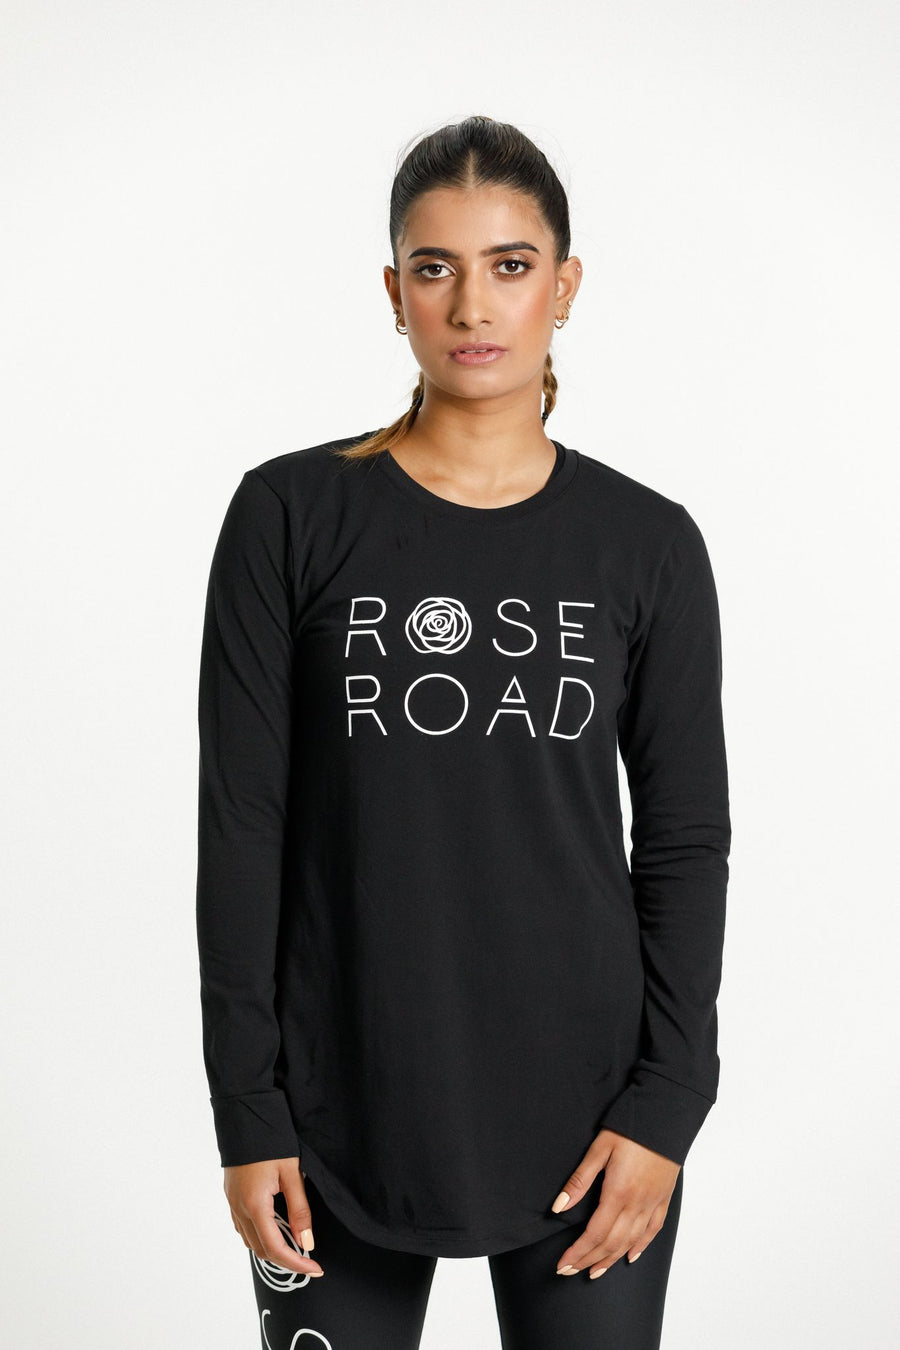 ROSE ROAD HARPER LS TEE - BLACK WITH LOGO - WILD ROSE